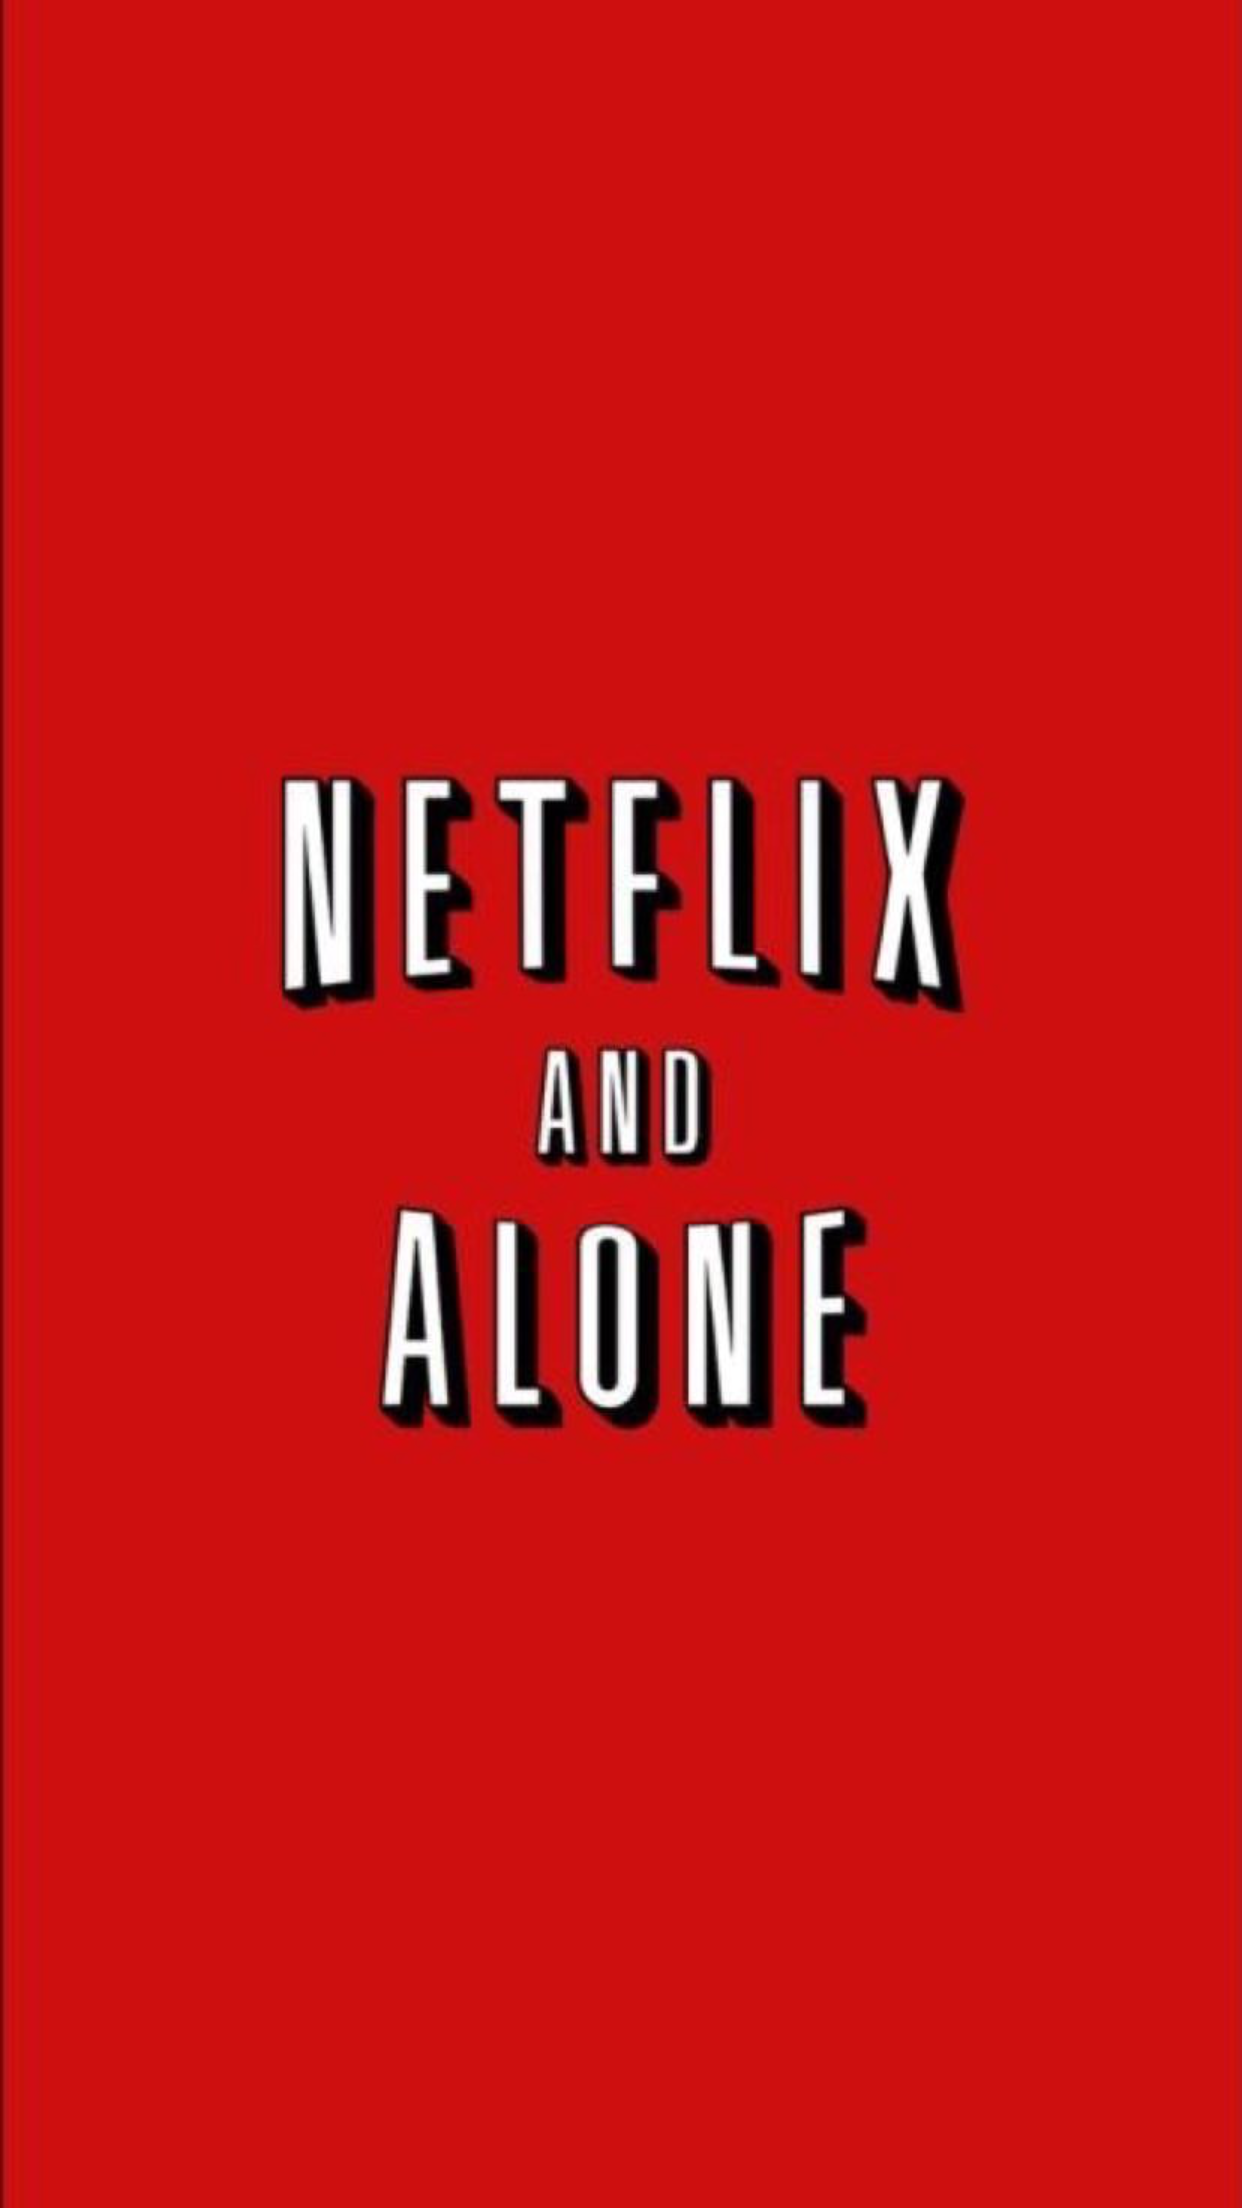 Netflix & Alone #wallpaper #wallpaper pin: @lovesherworld